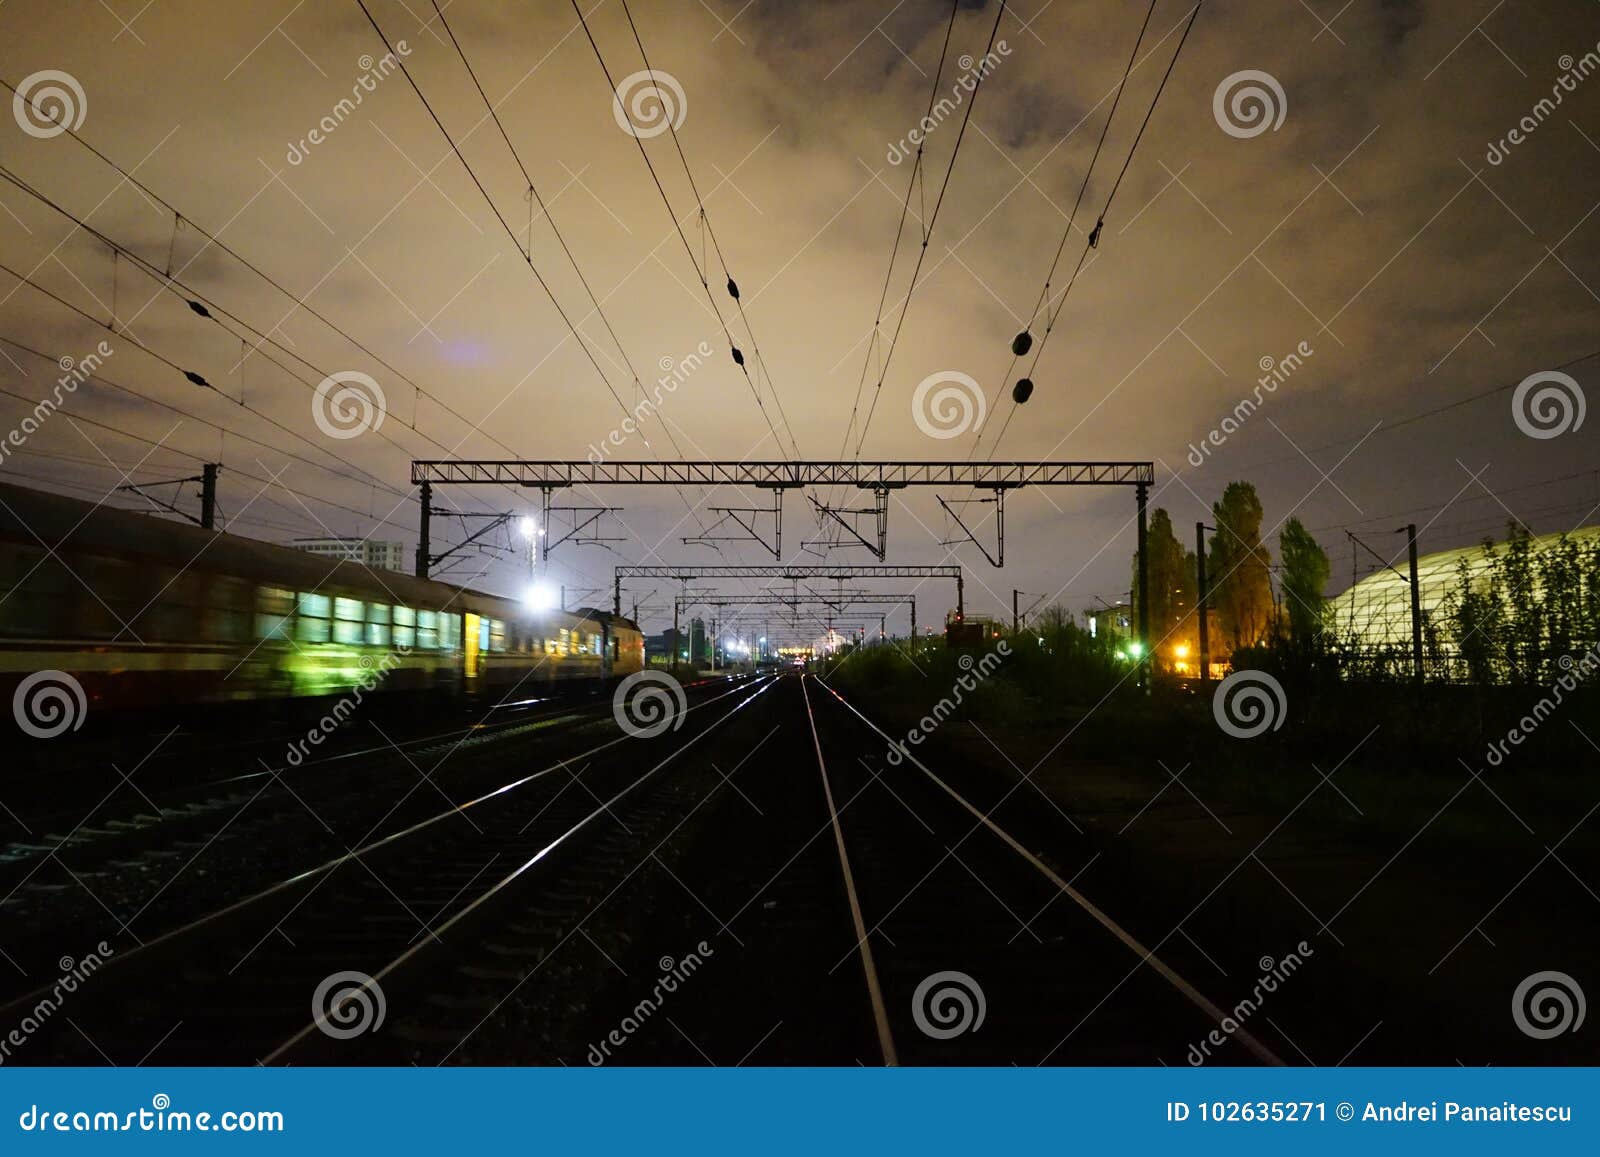 night scene of rails and train in carpati station, bucharest, cfr